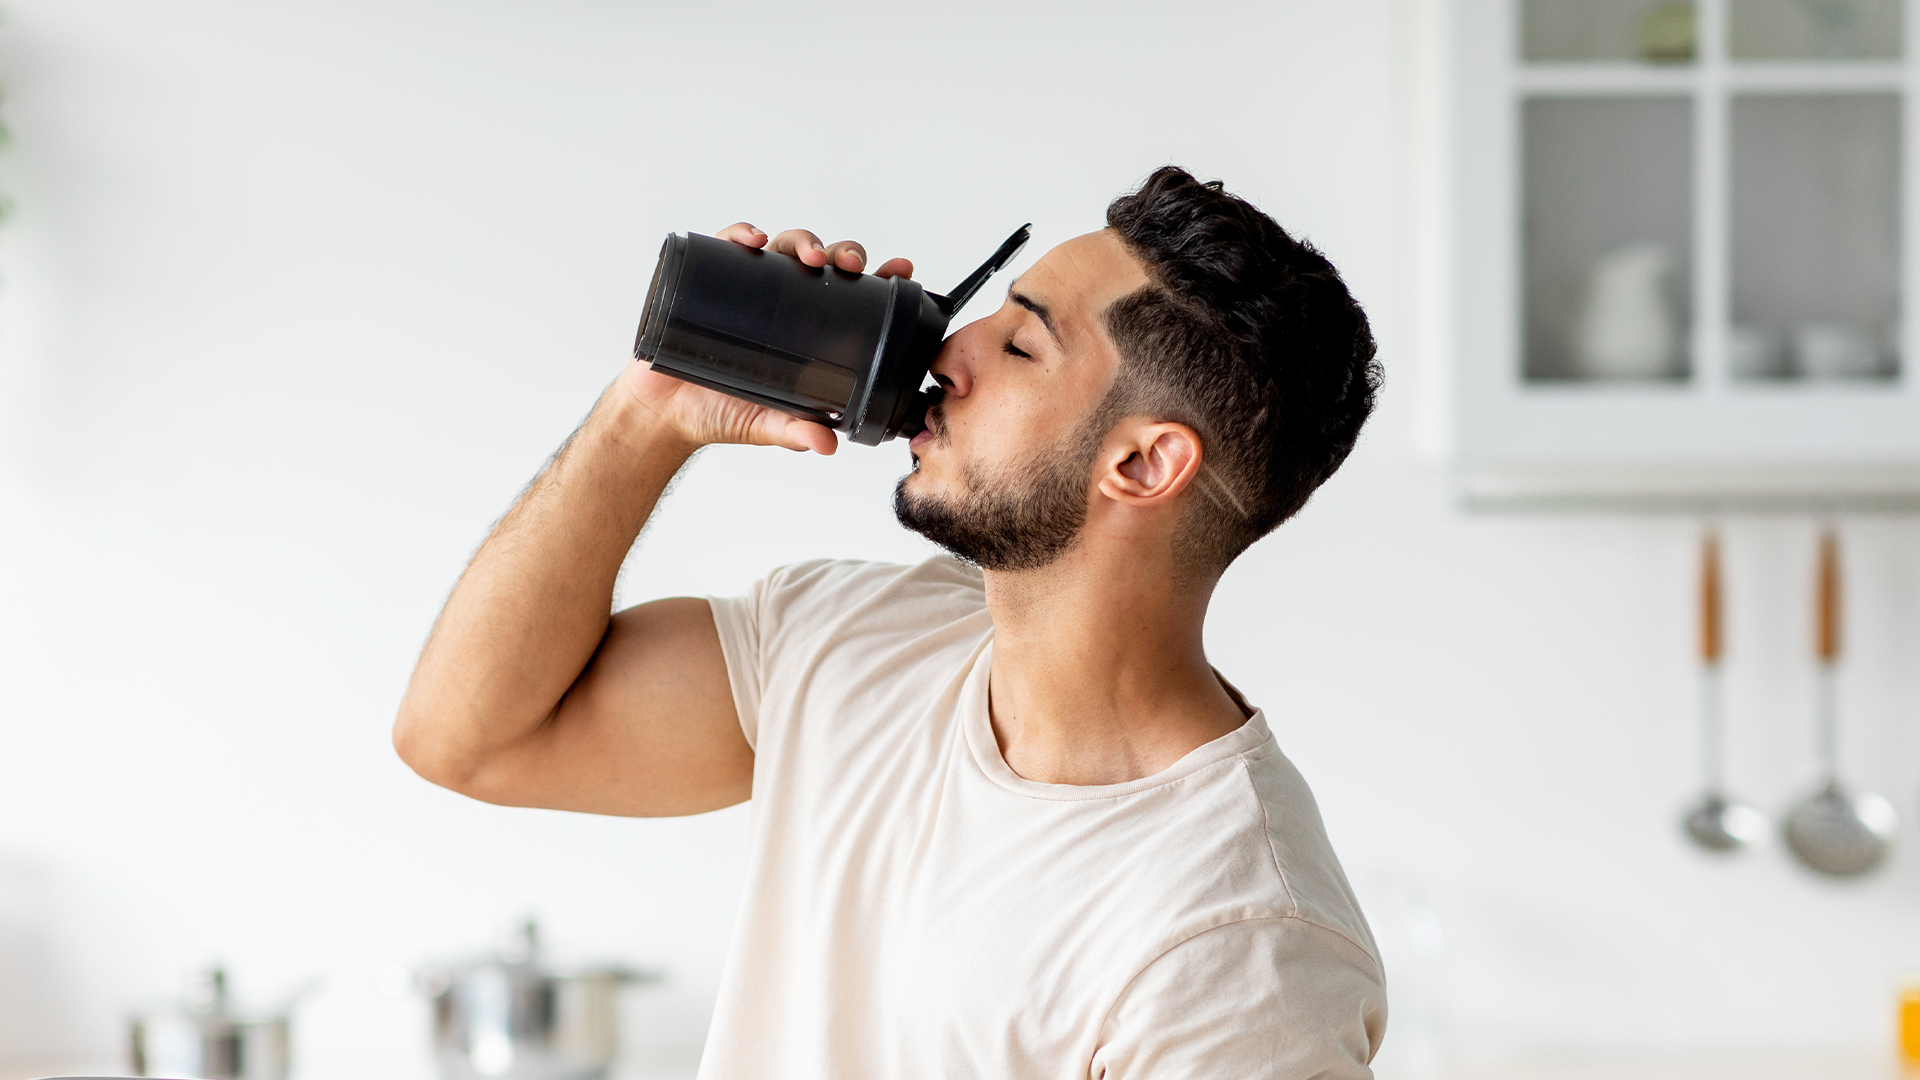 Man drinking protein shake